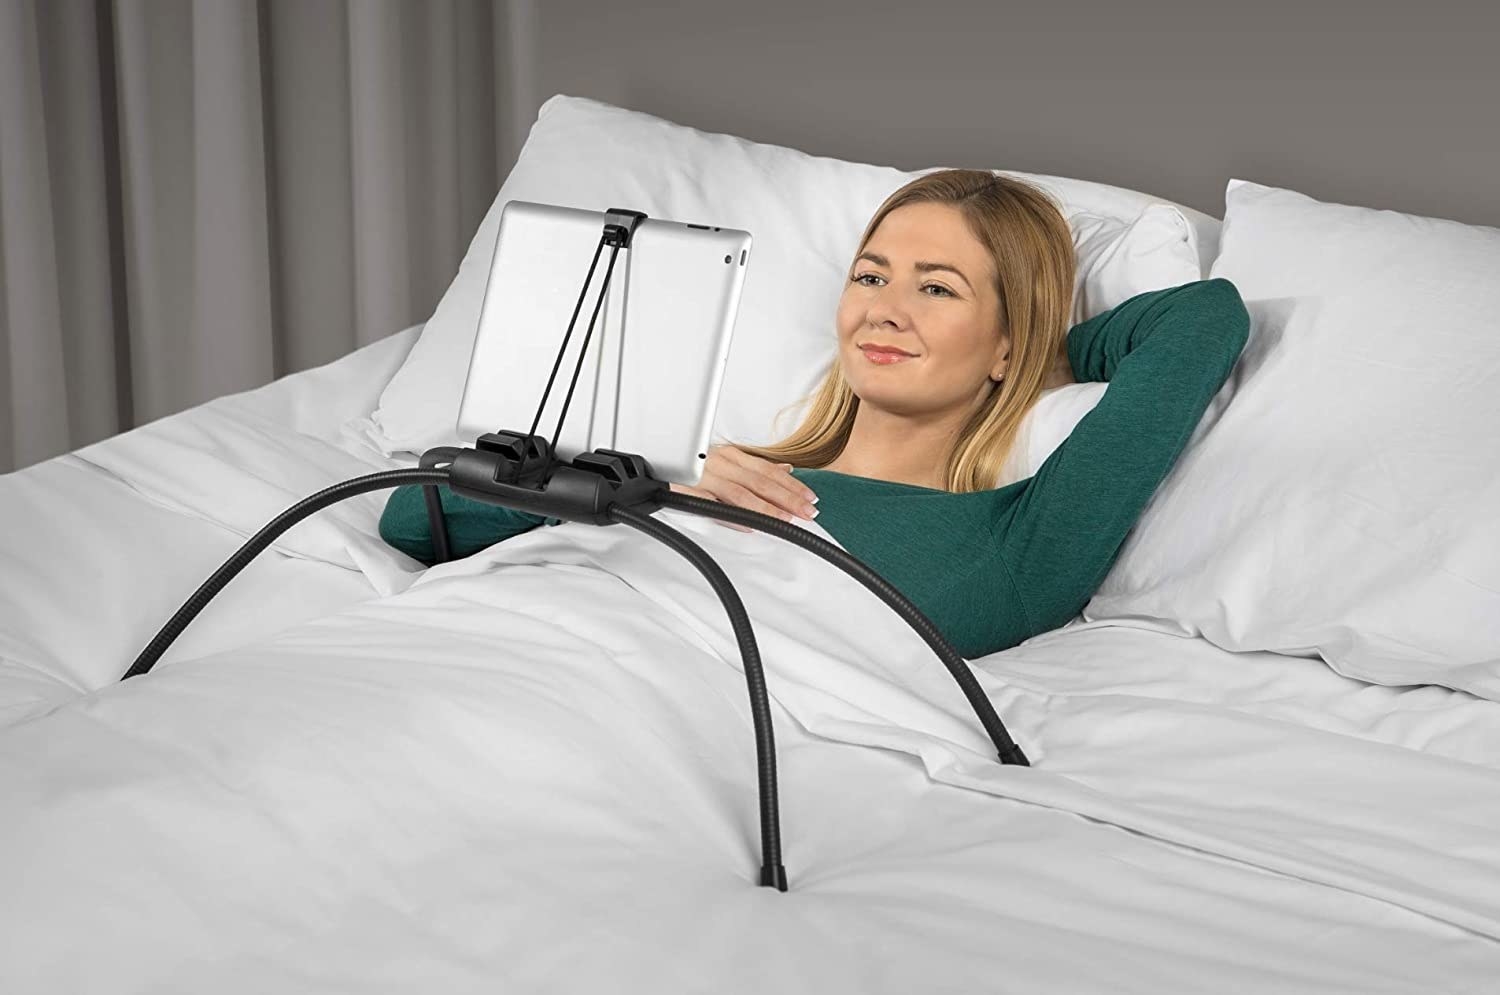 Model using the black tablet holder in bed